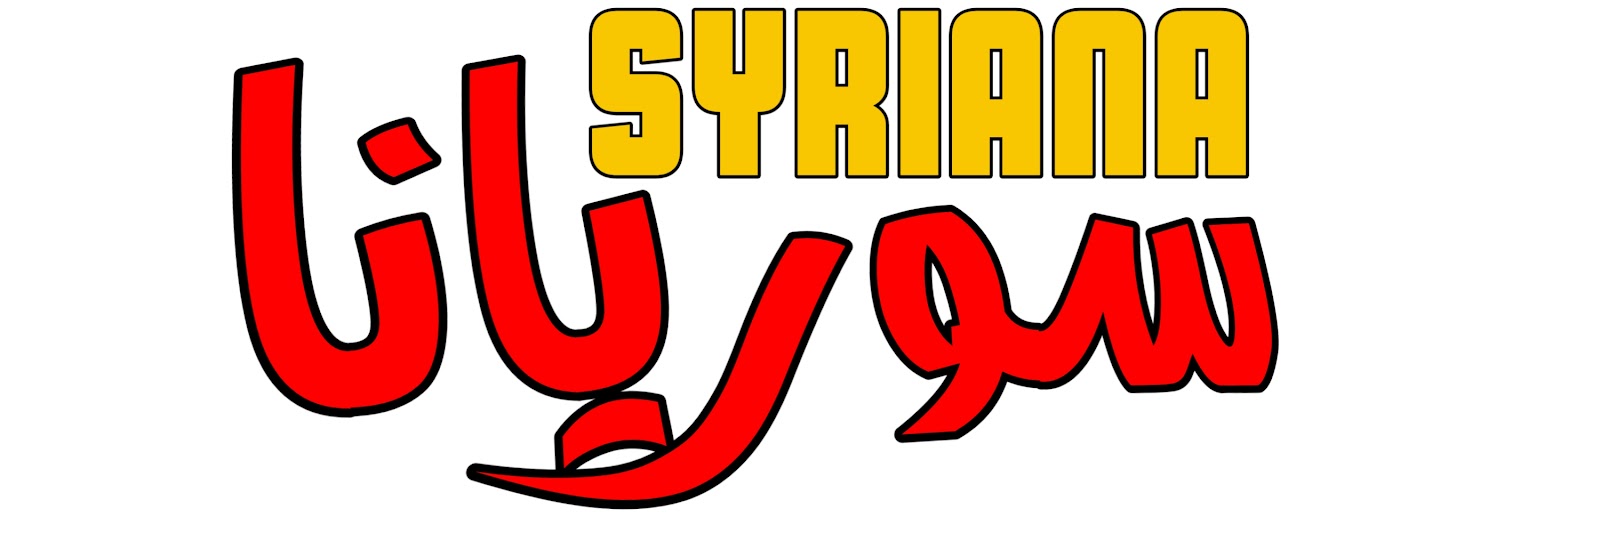 سوريانا syriana